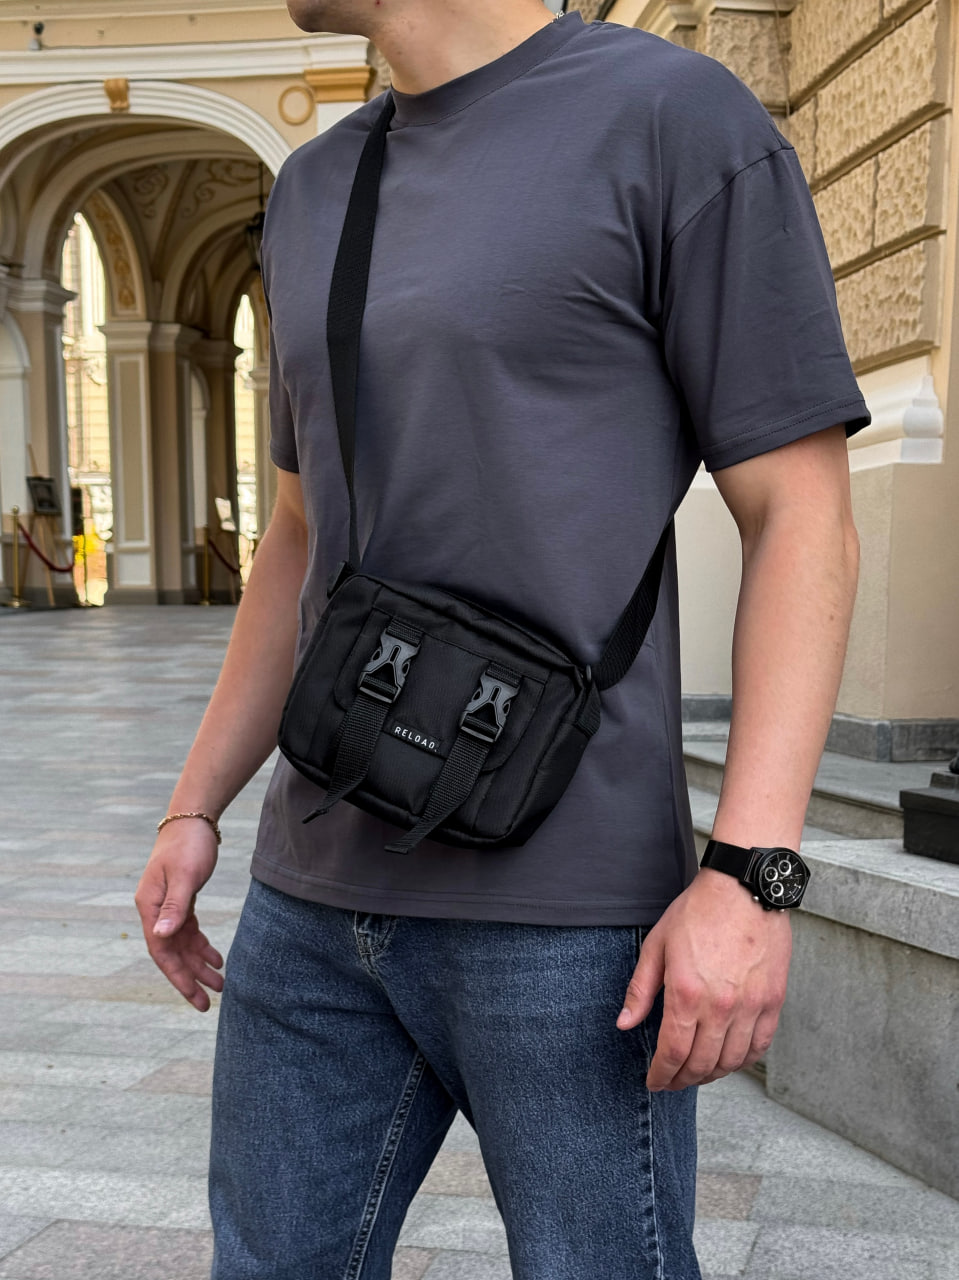 Месенджер (сумка) з фастексом Reload, чорний - Фото 2